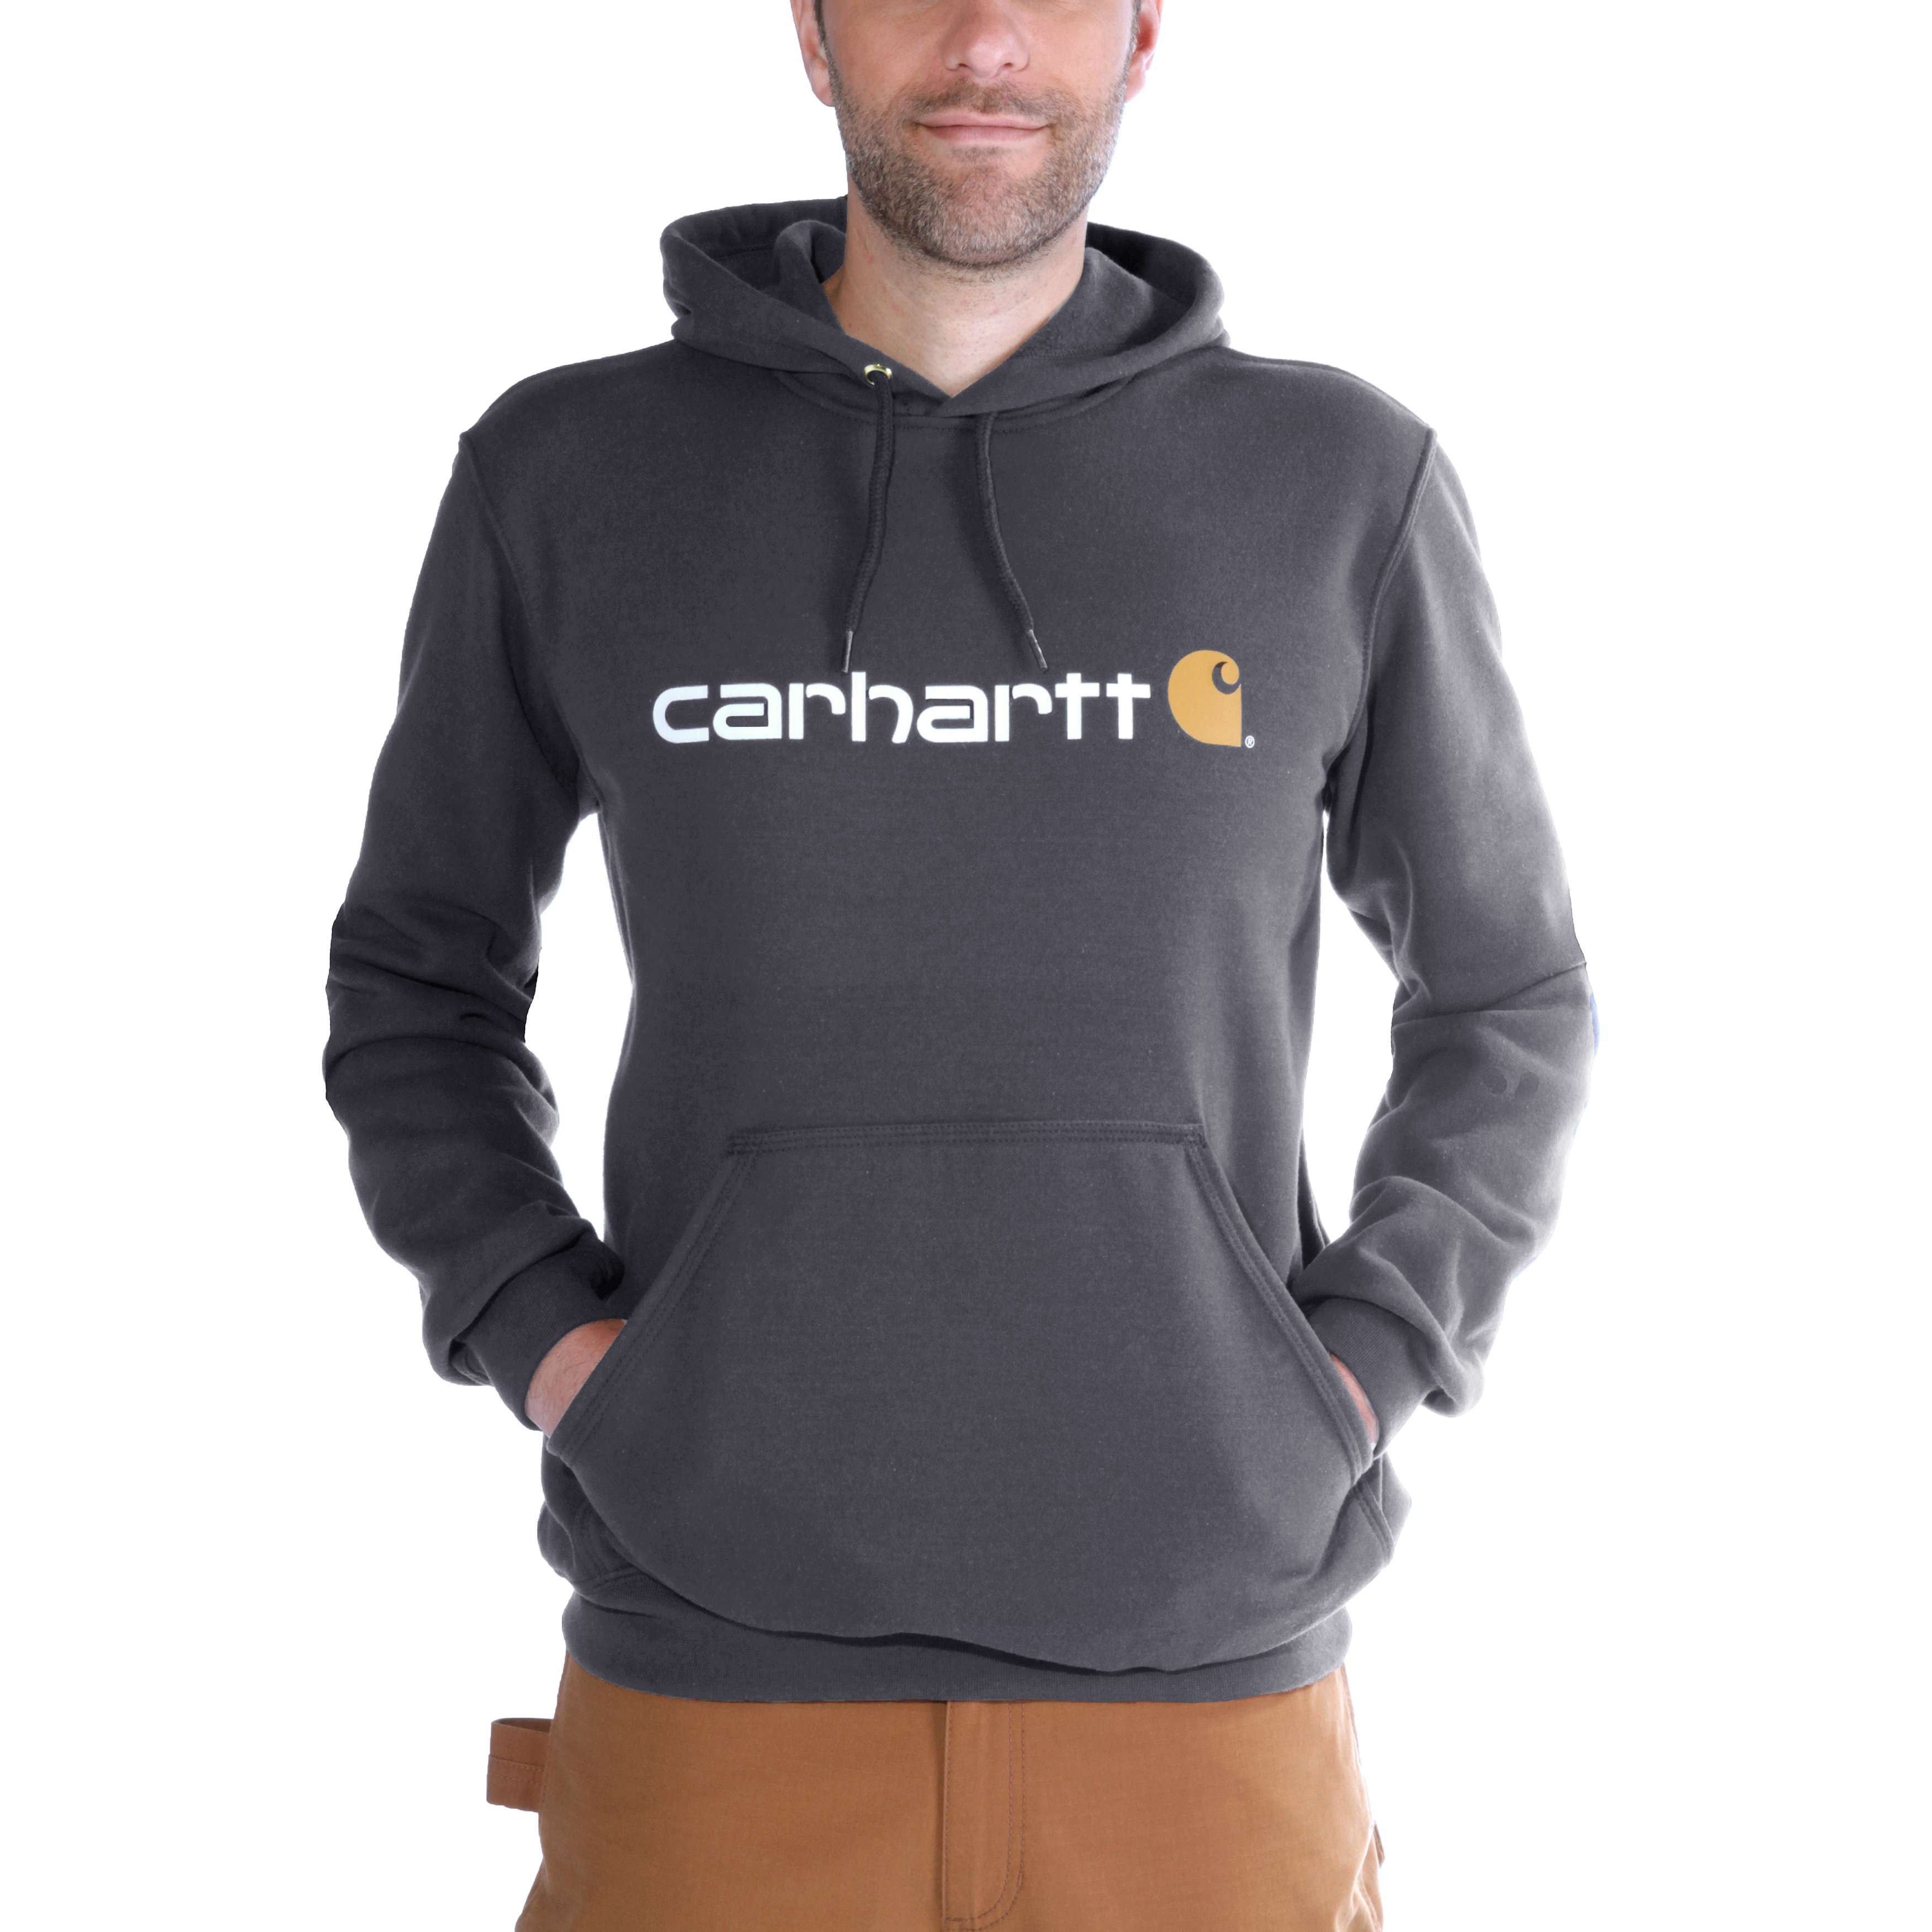 Carhartt Hoodies - Loose fit herensweater met capuchon en carhartt-logo Grijs - M